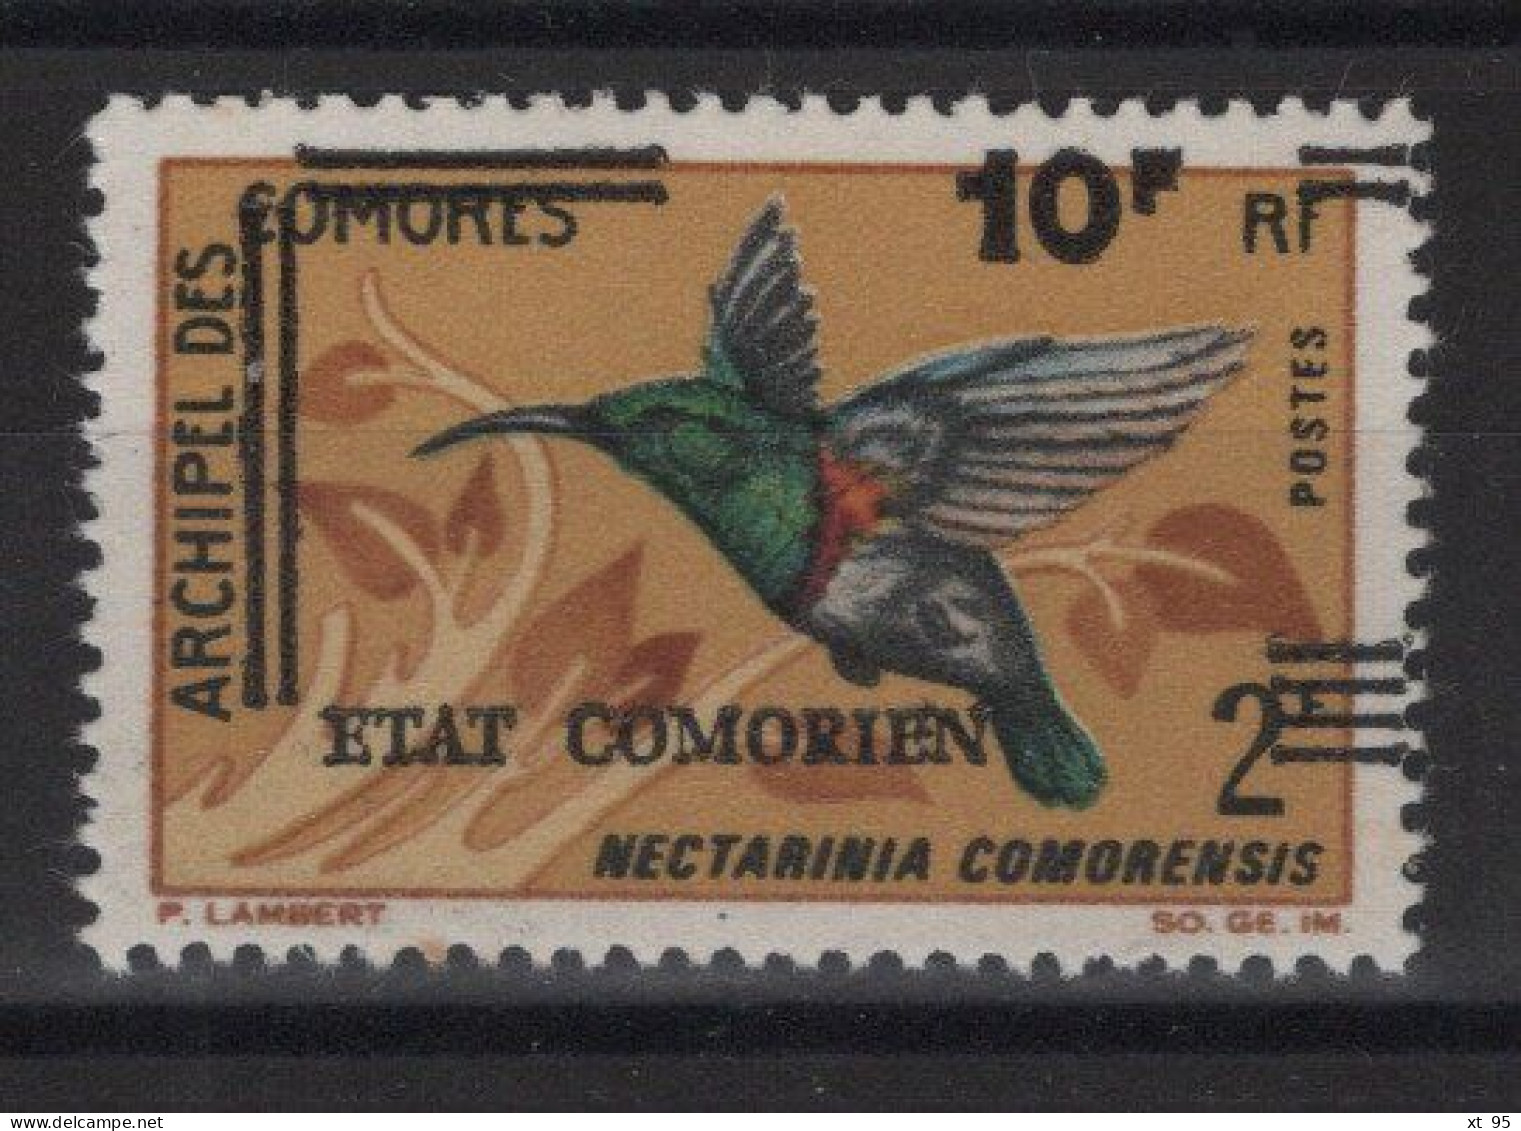 Comores - N°107 - Variete Surcharge Decalee - ** Neuf Sans Charniere - Comoros